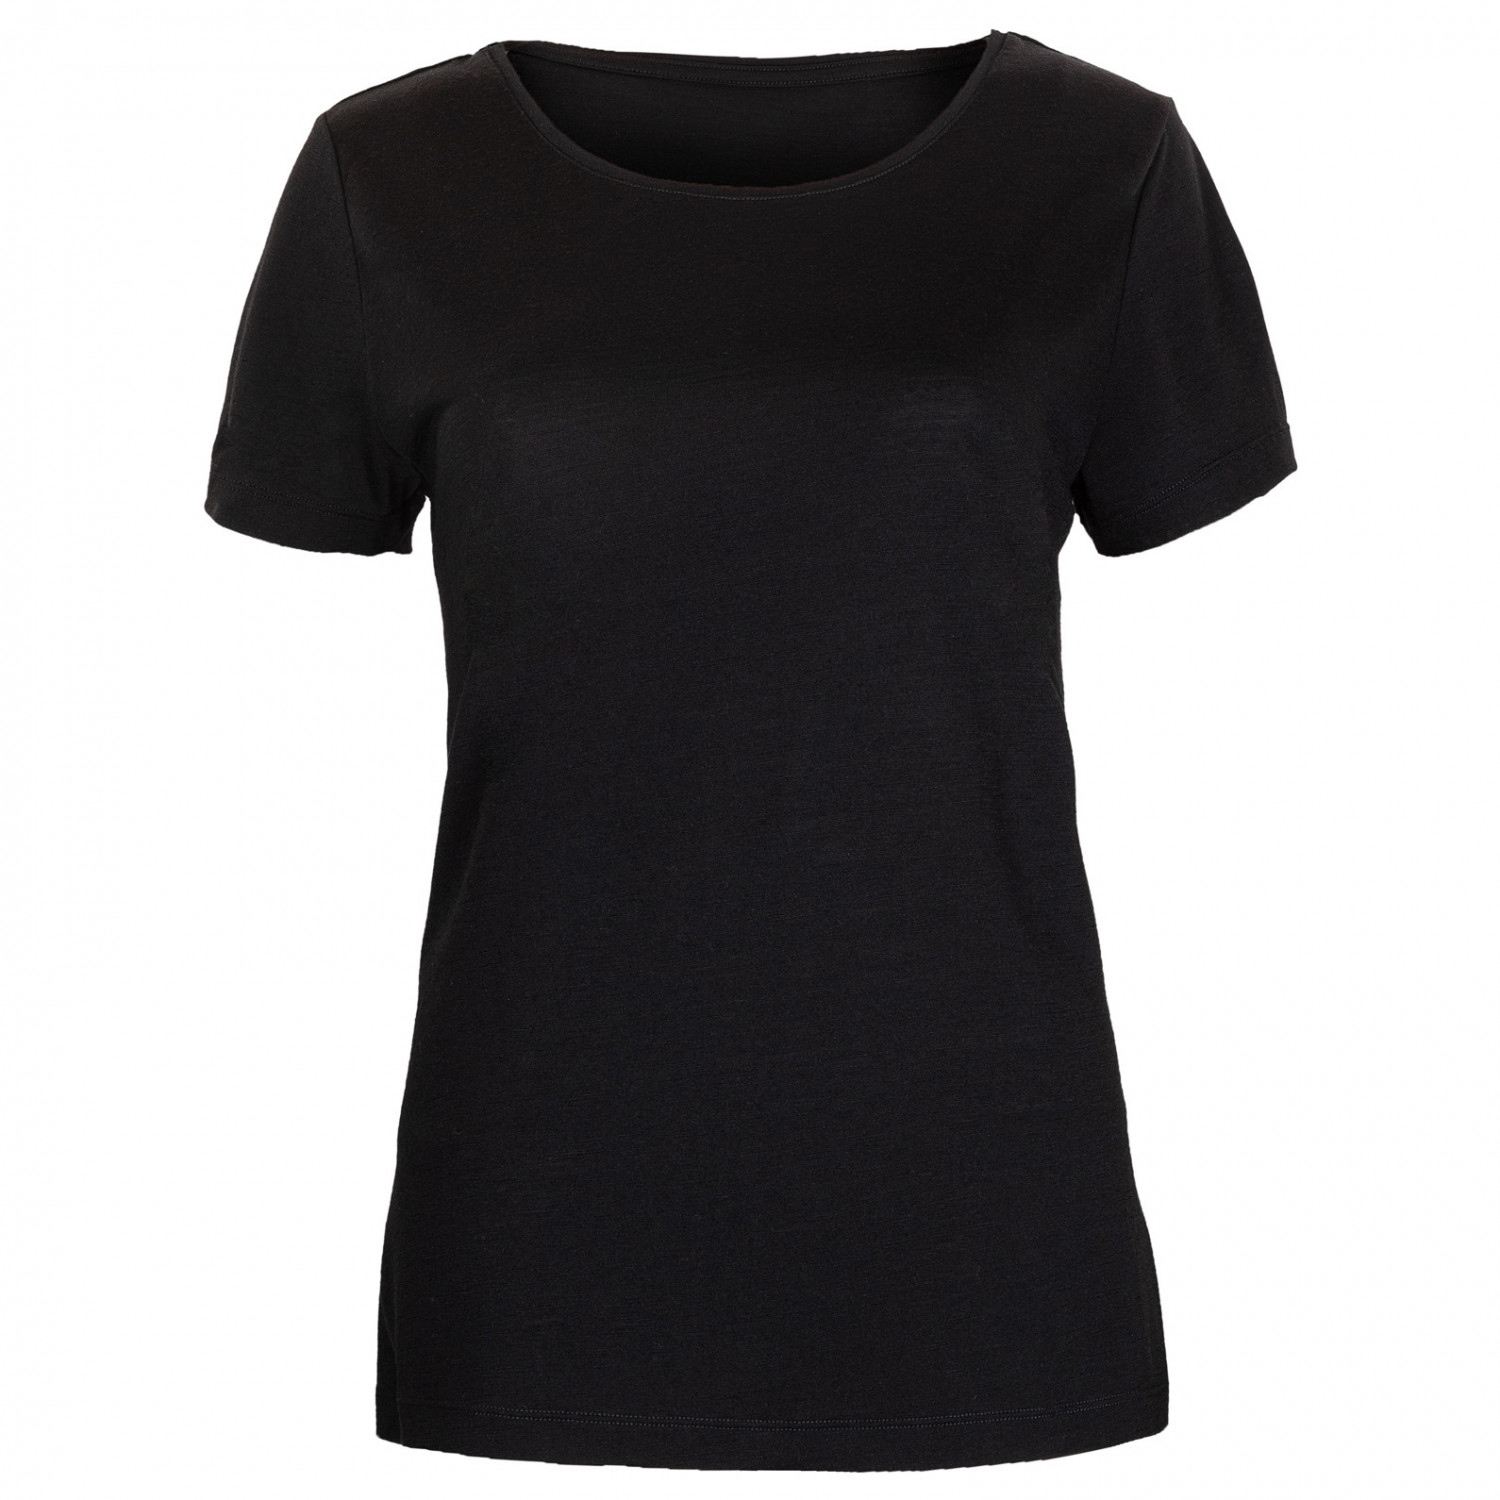 Рубашка из мериноса Thermowave Women's Merino Cooler Trulite T Shirt, черный